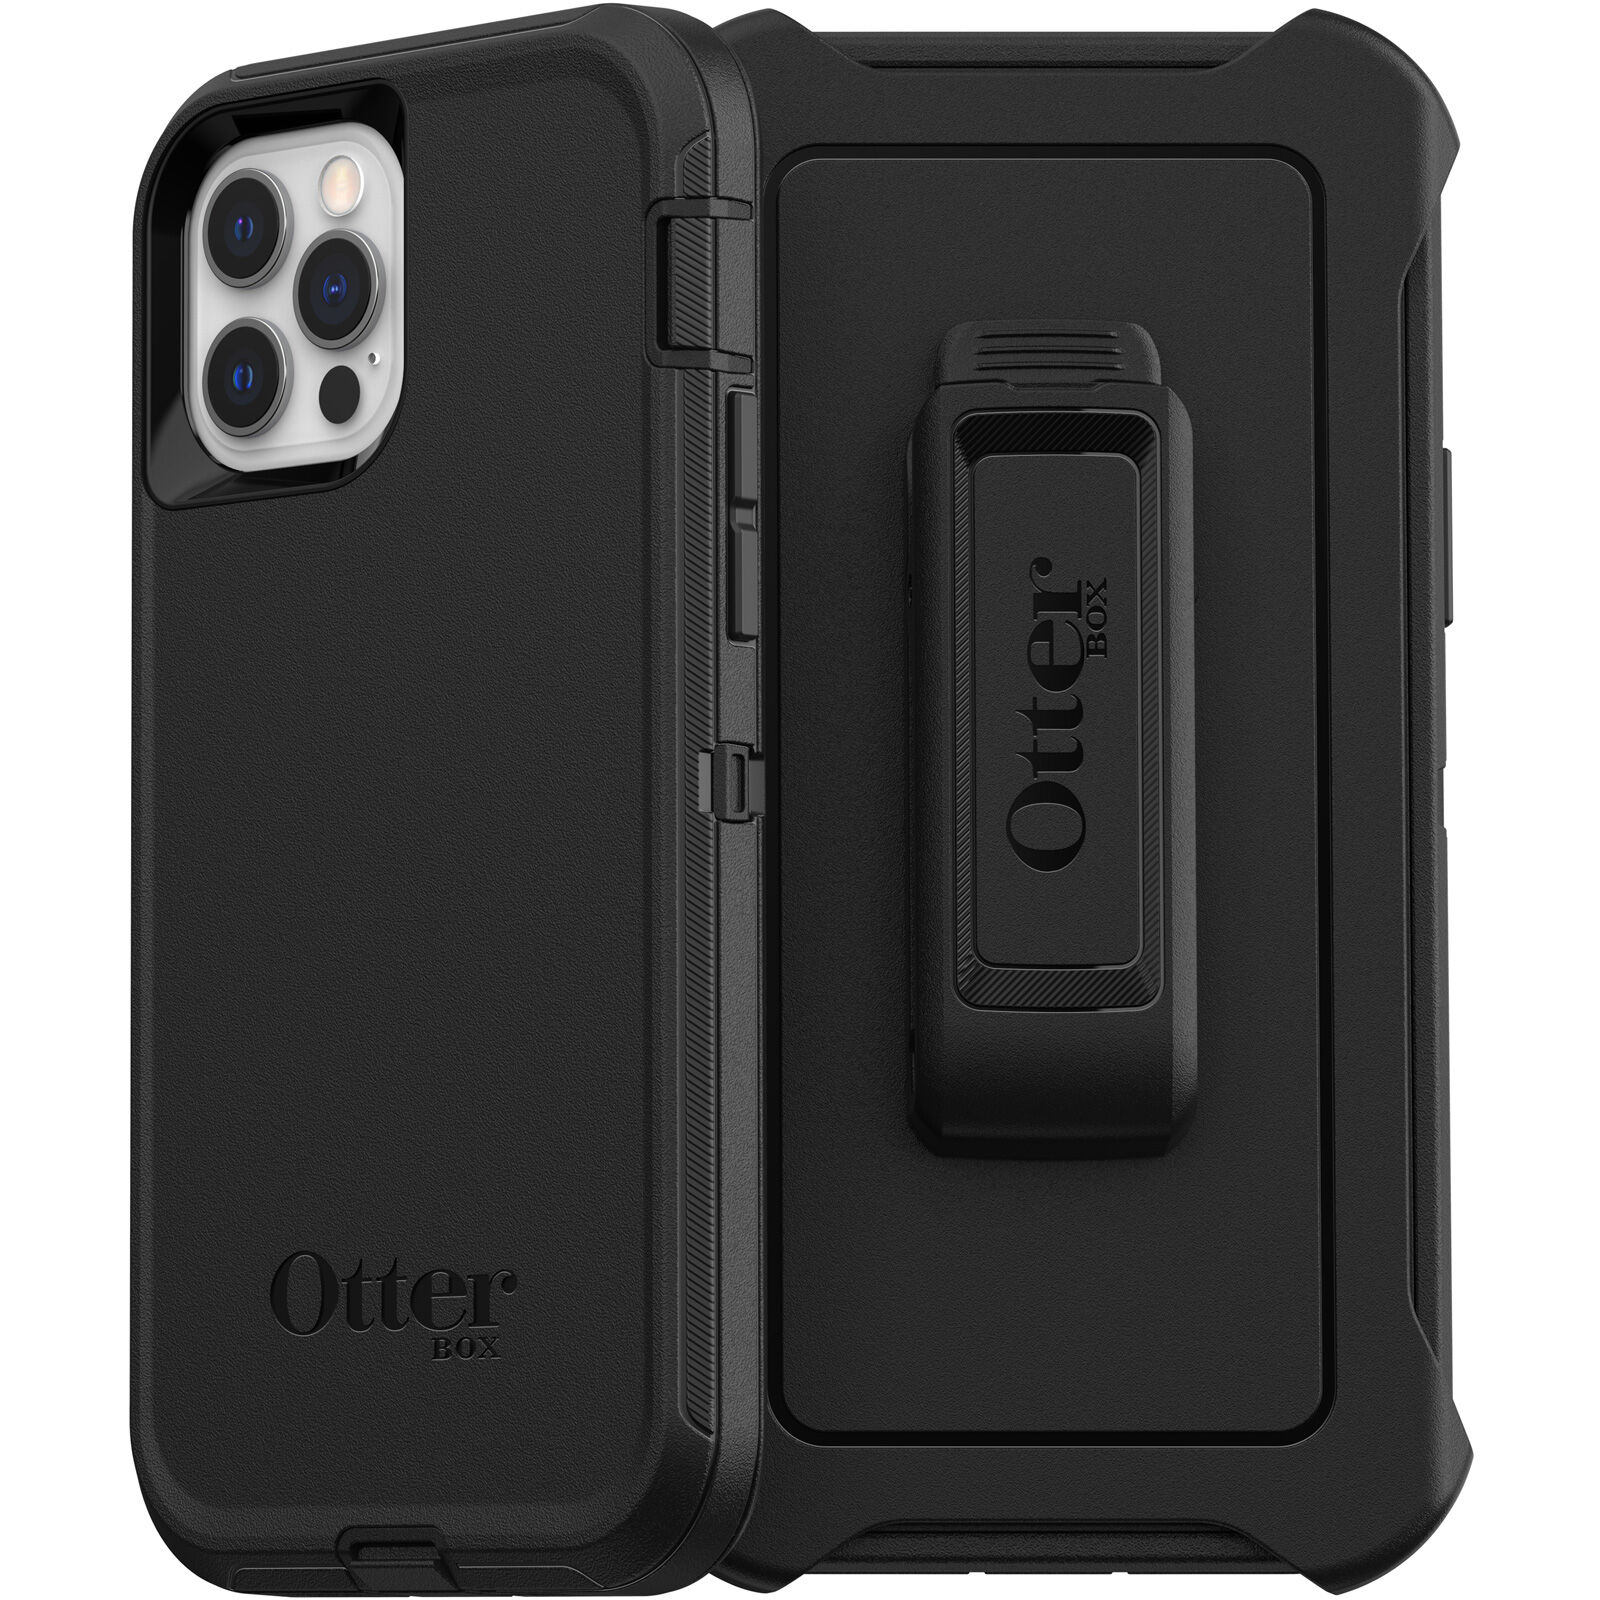 Black Rugged iPhone 12 Case | OtterBox Defender Series Case